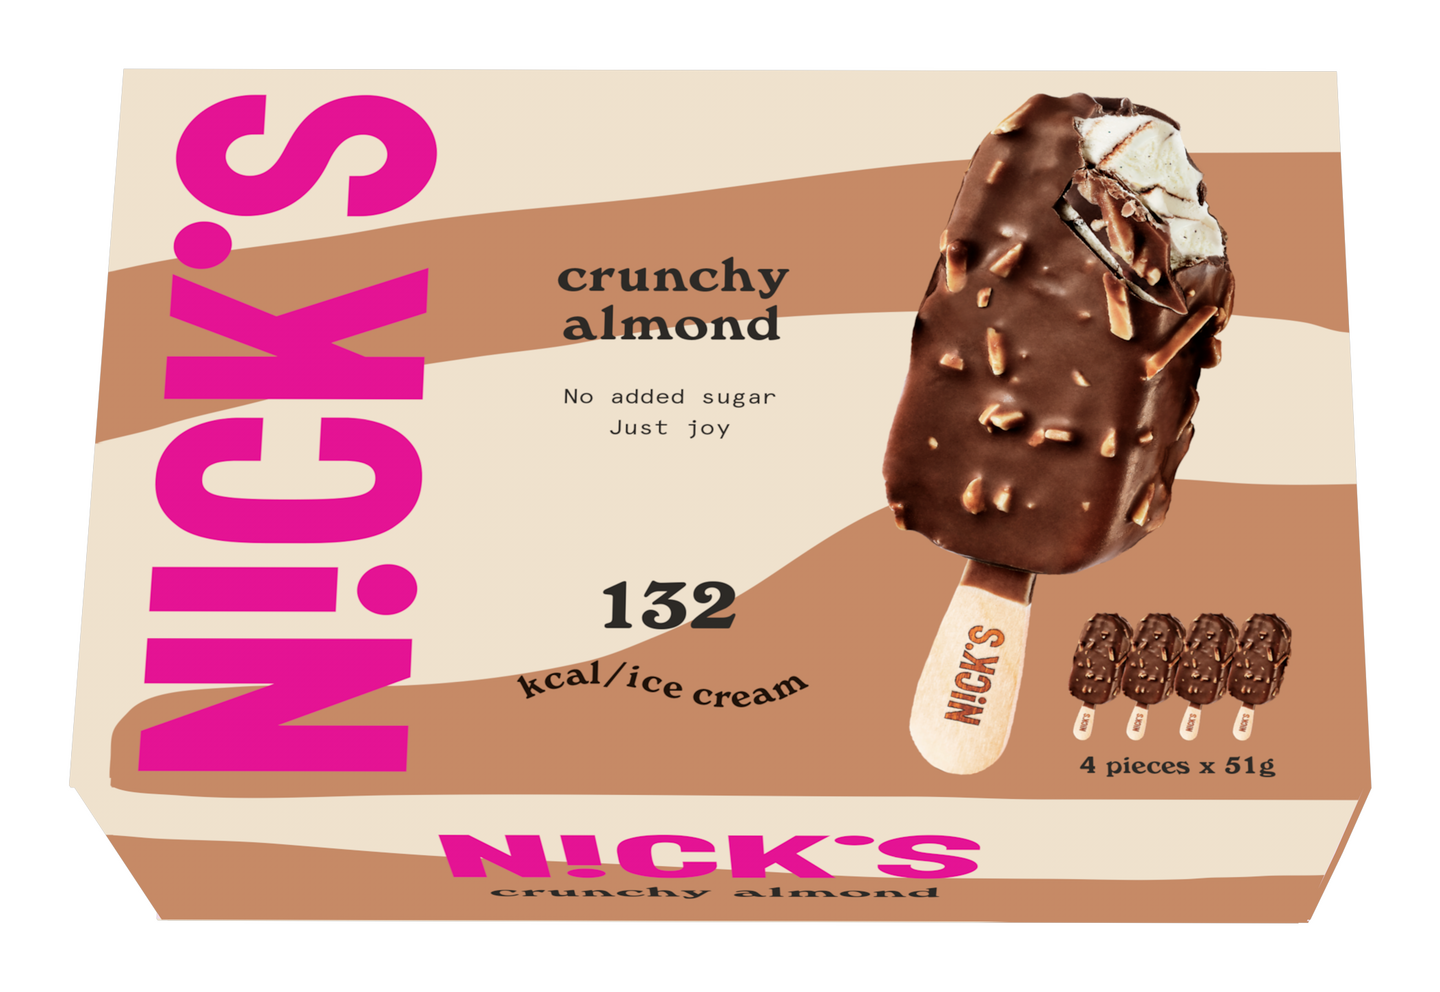 Nick's multipack 4x51g Crunchy almond